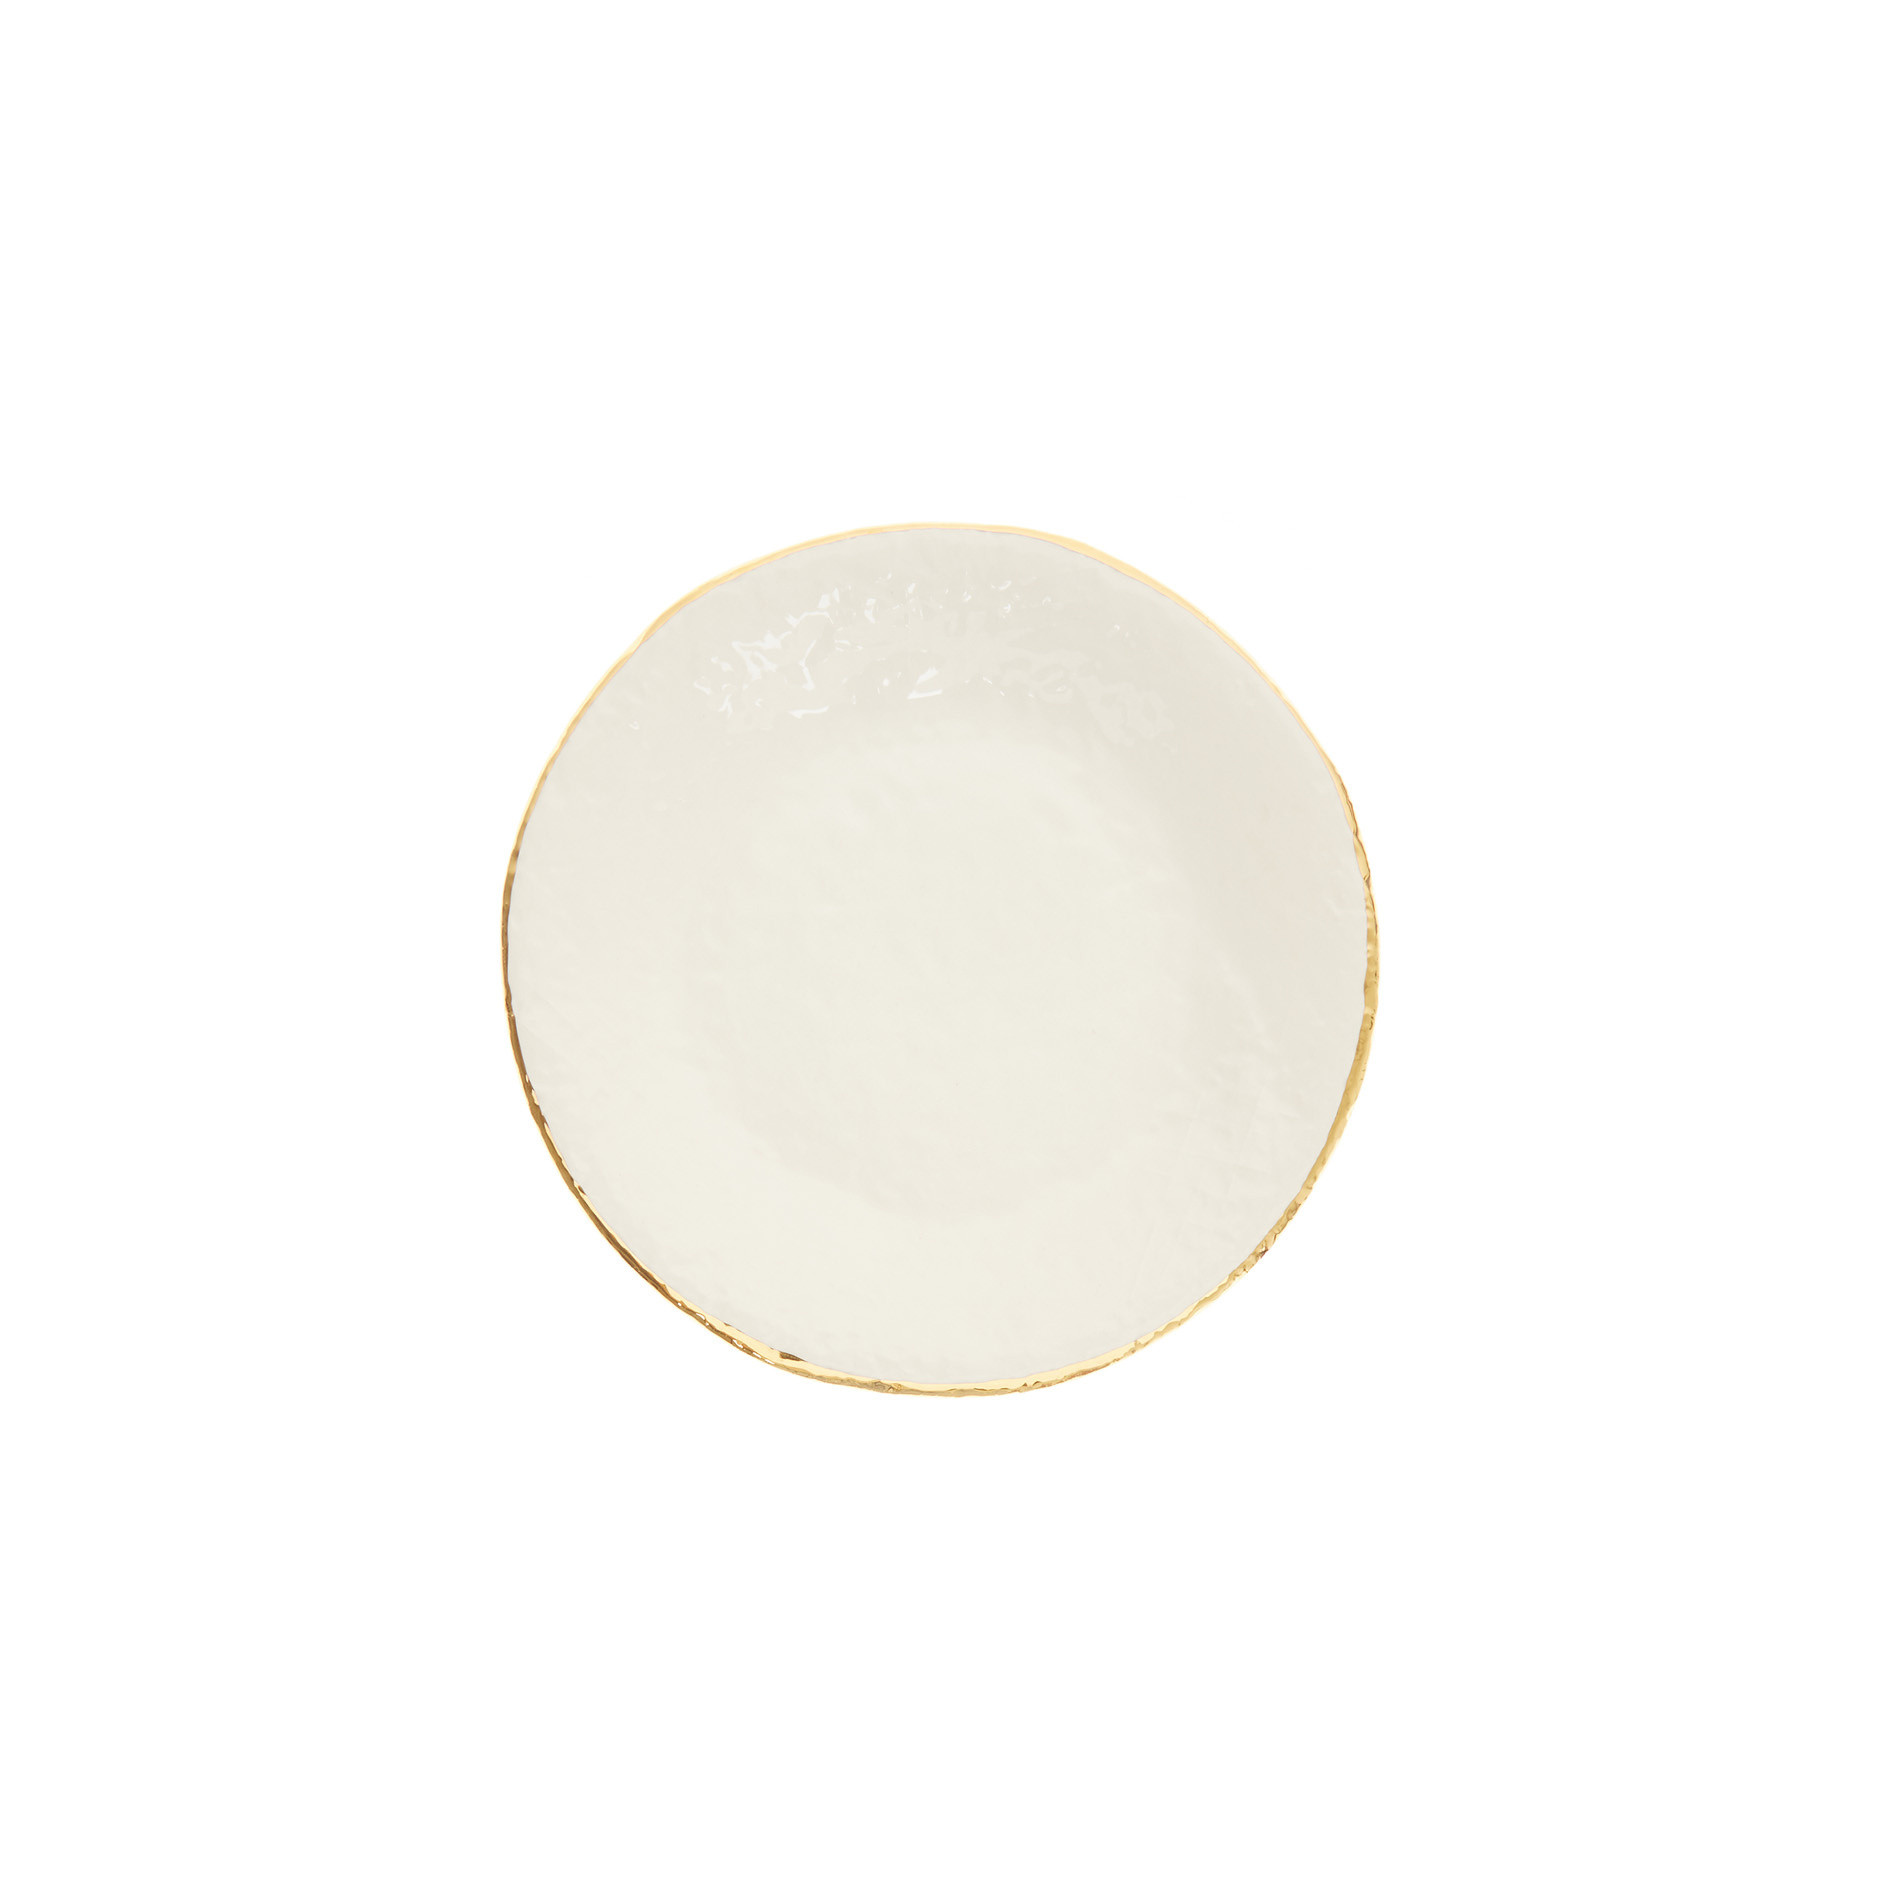 Piatto frutta ceramica artigianale Preta, Bianco panna, large image number 0